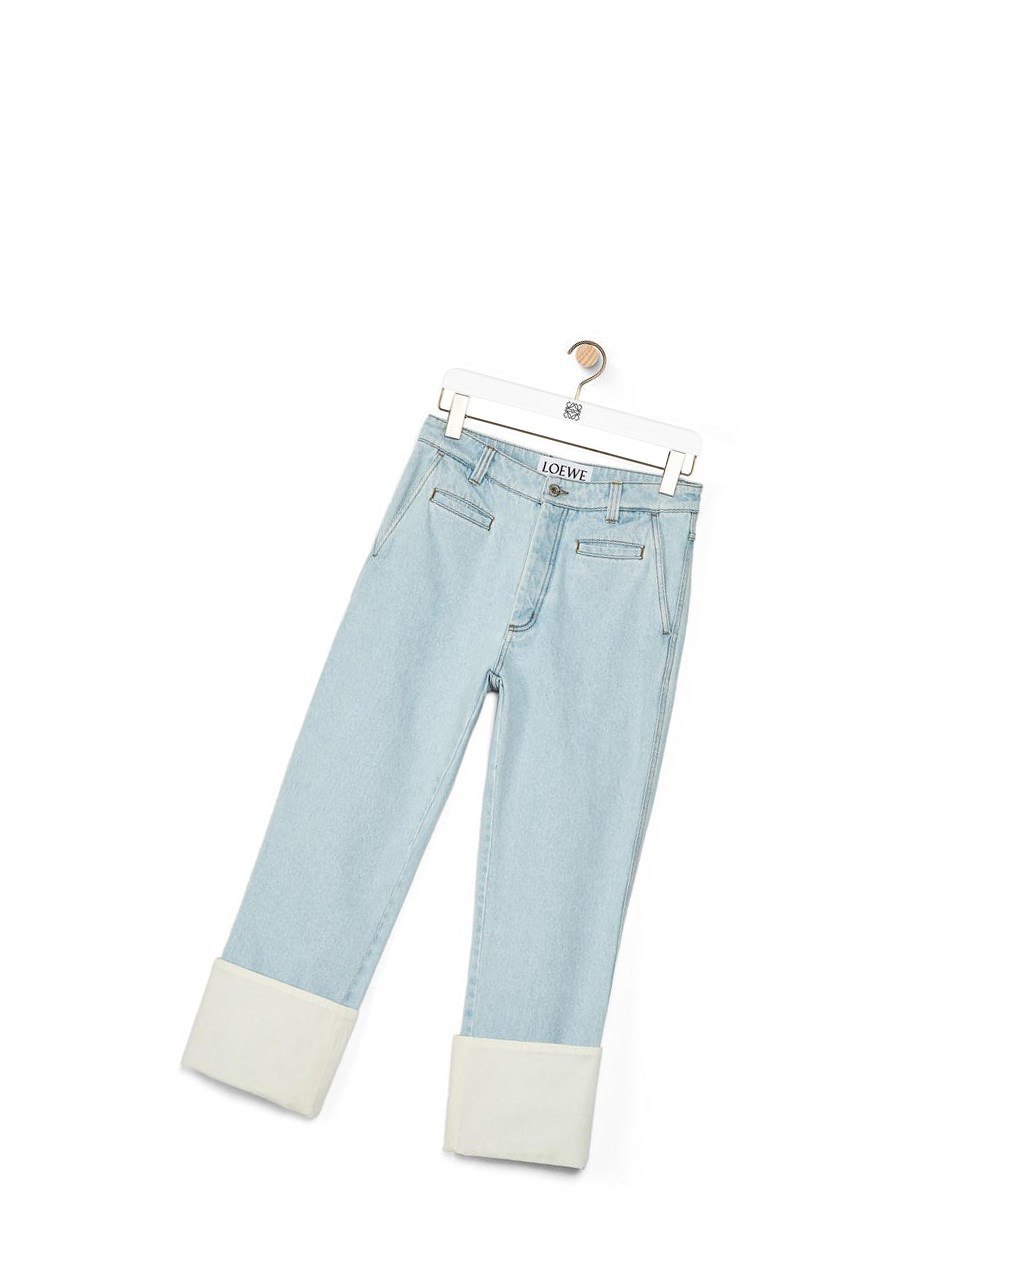 Loewe Fisherman jeans in denim Light Blue | VN6892103